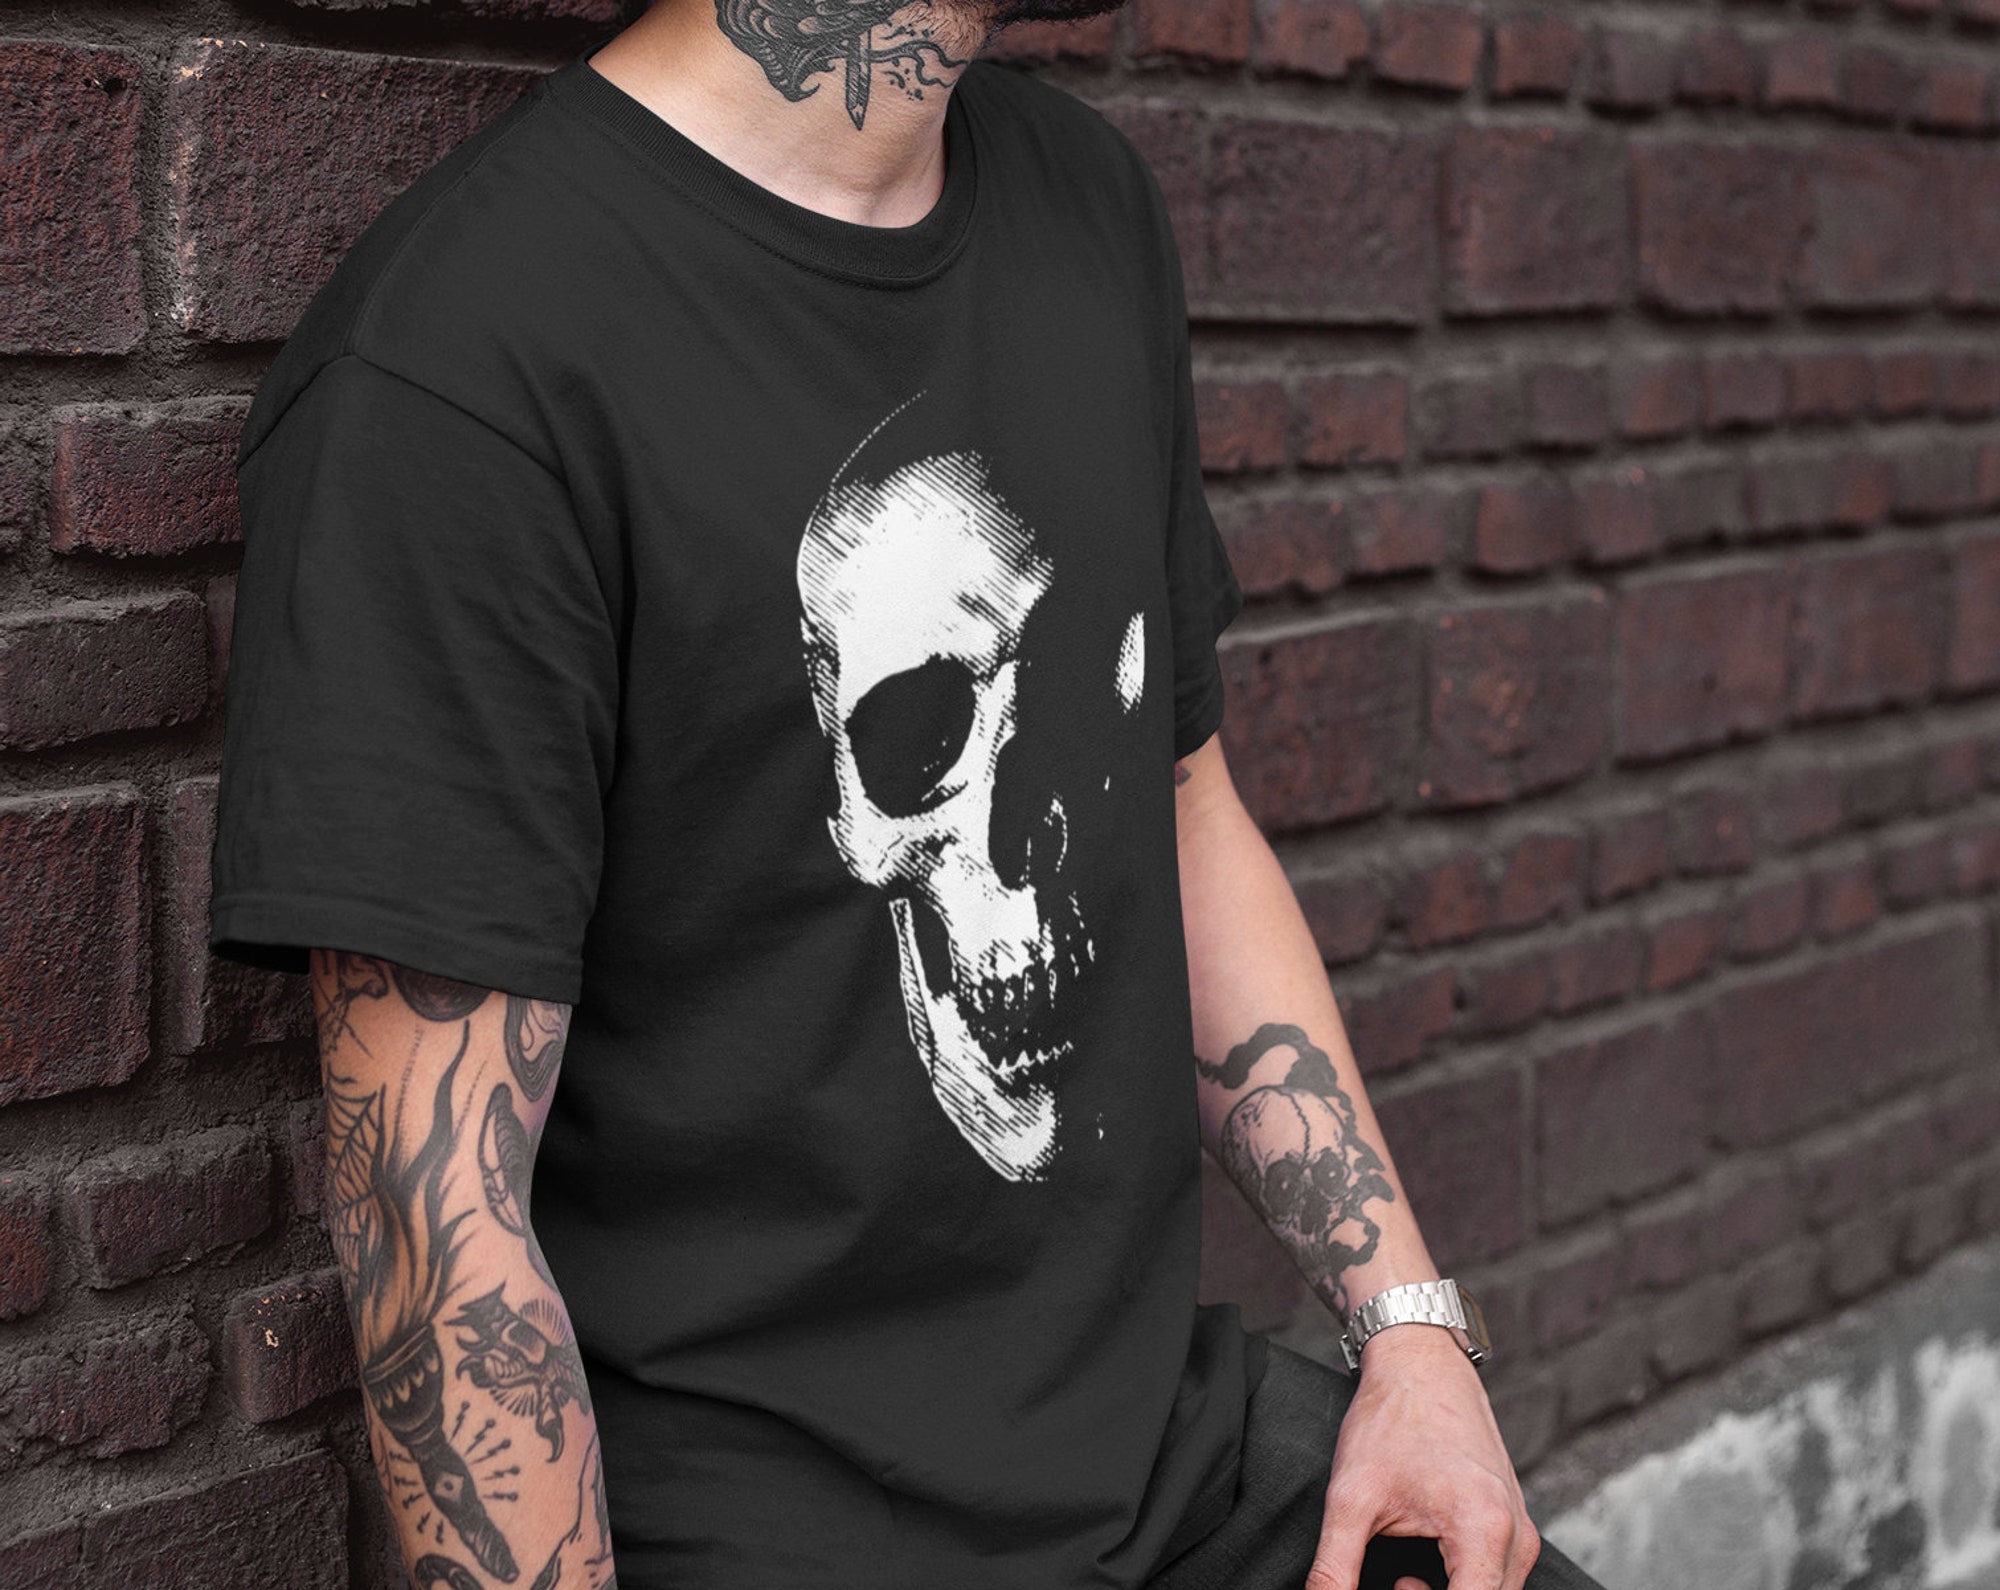 Discover Cool Skull shirts, Memento mori, Unisex Cool Human Black White Skull t-shirt